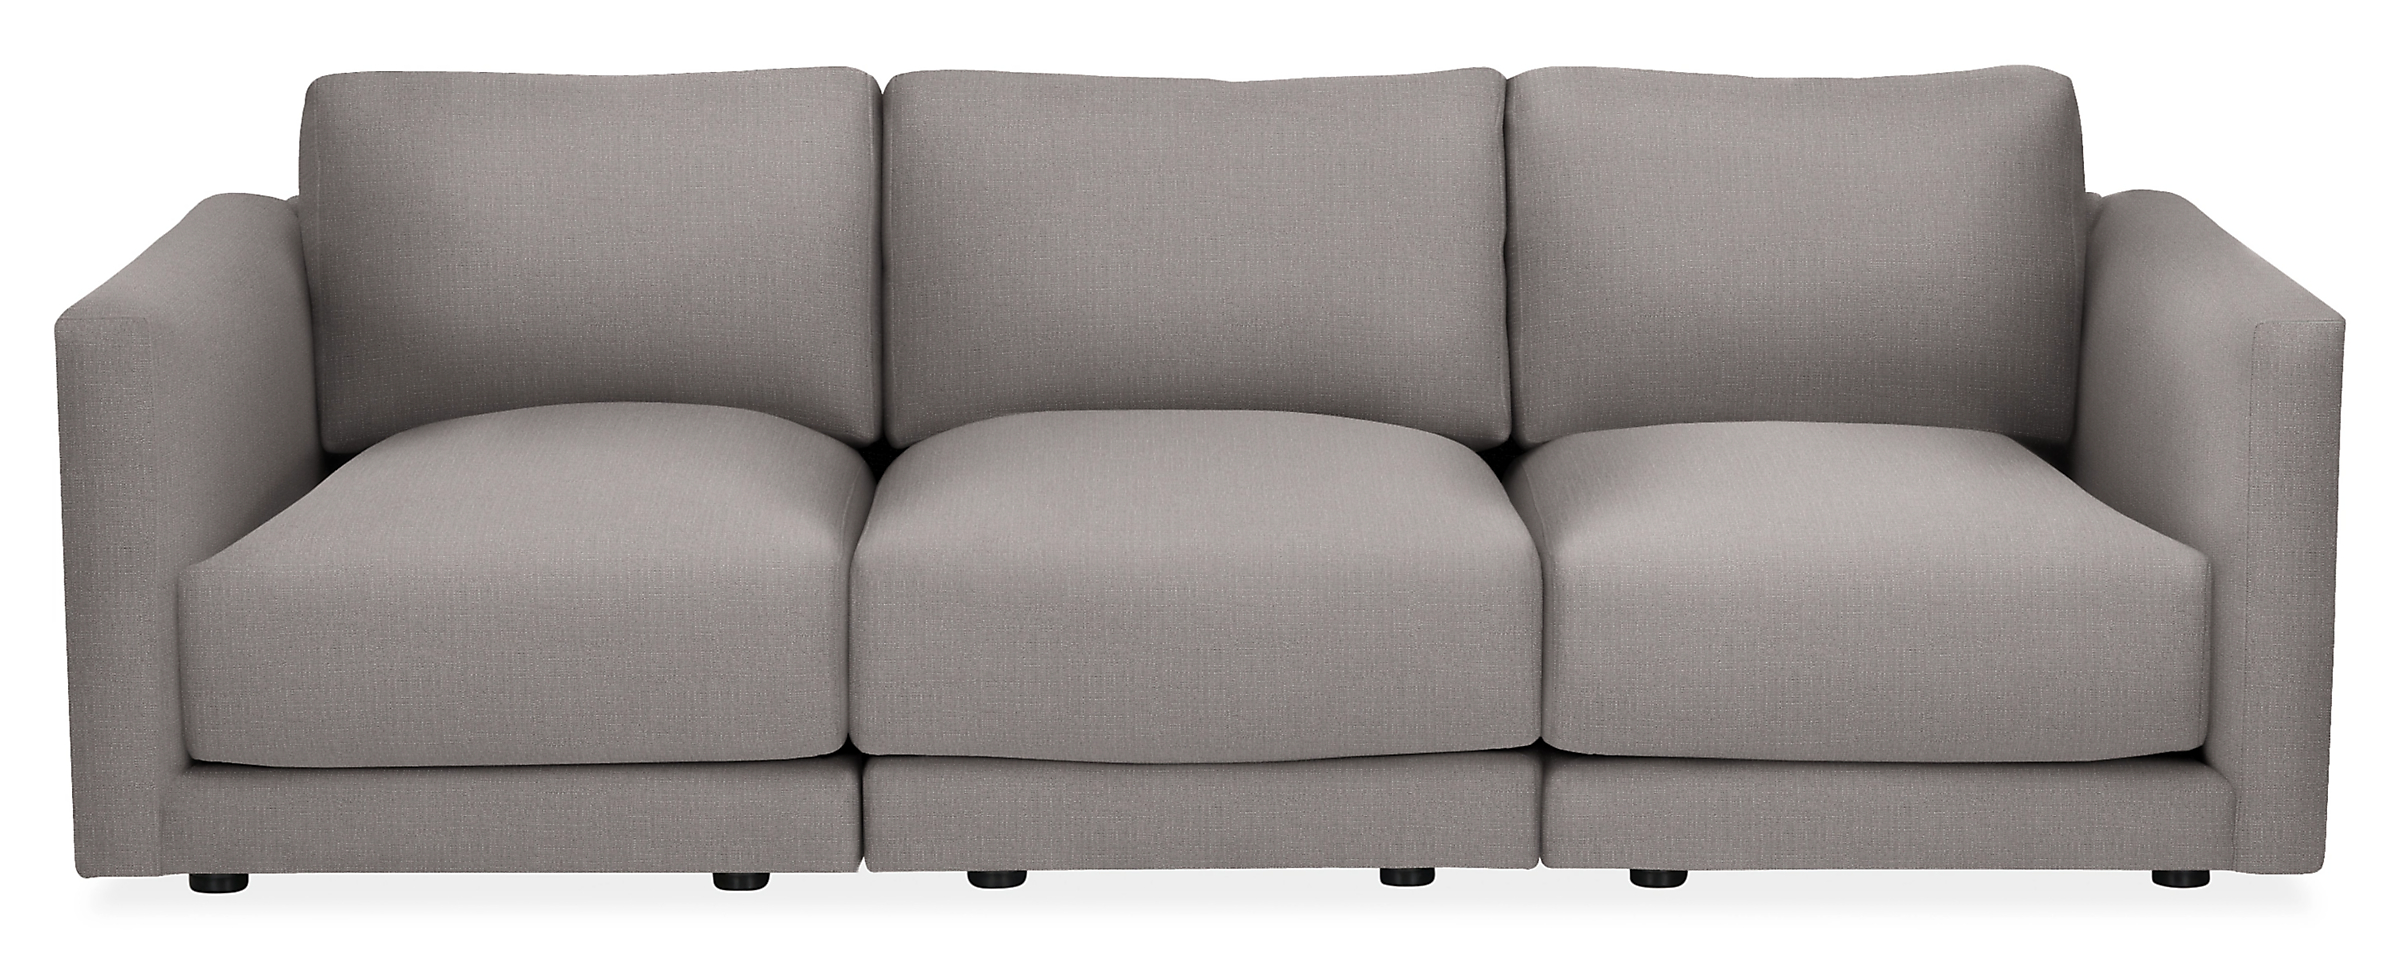 Clemens 107" Three-Piece Modular Sofa in Hines Graphite